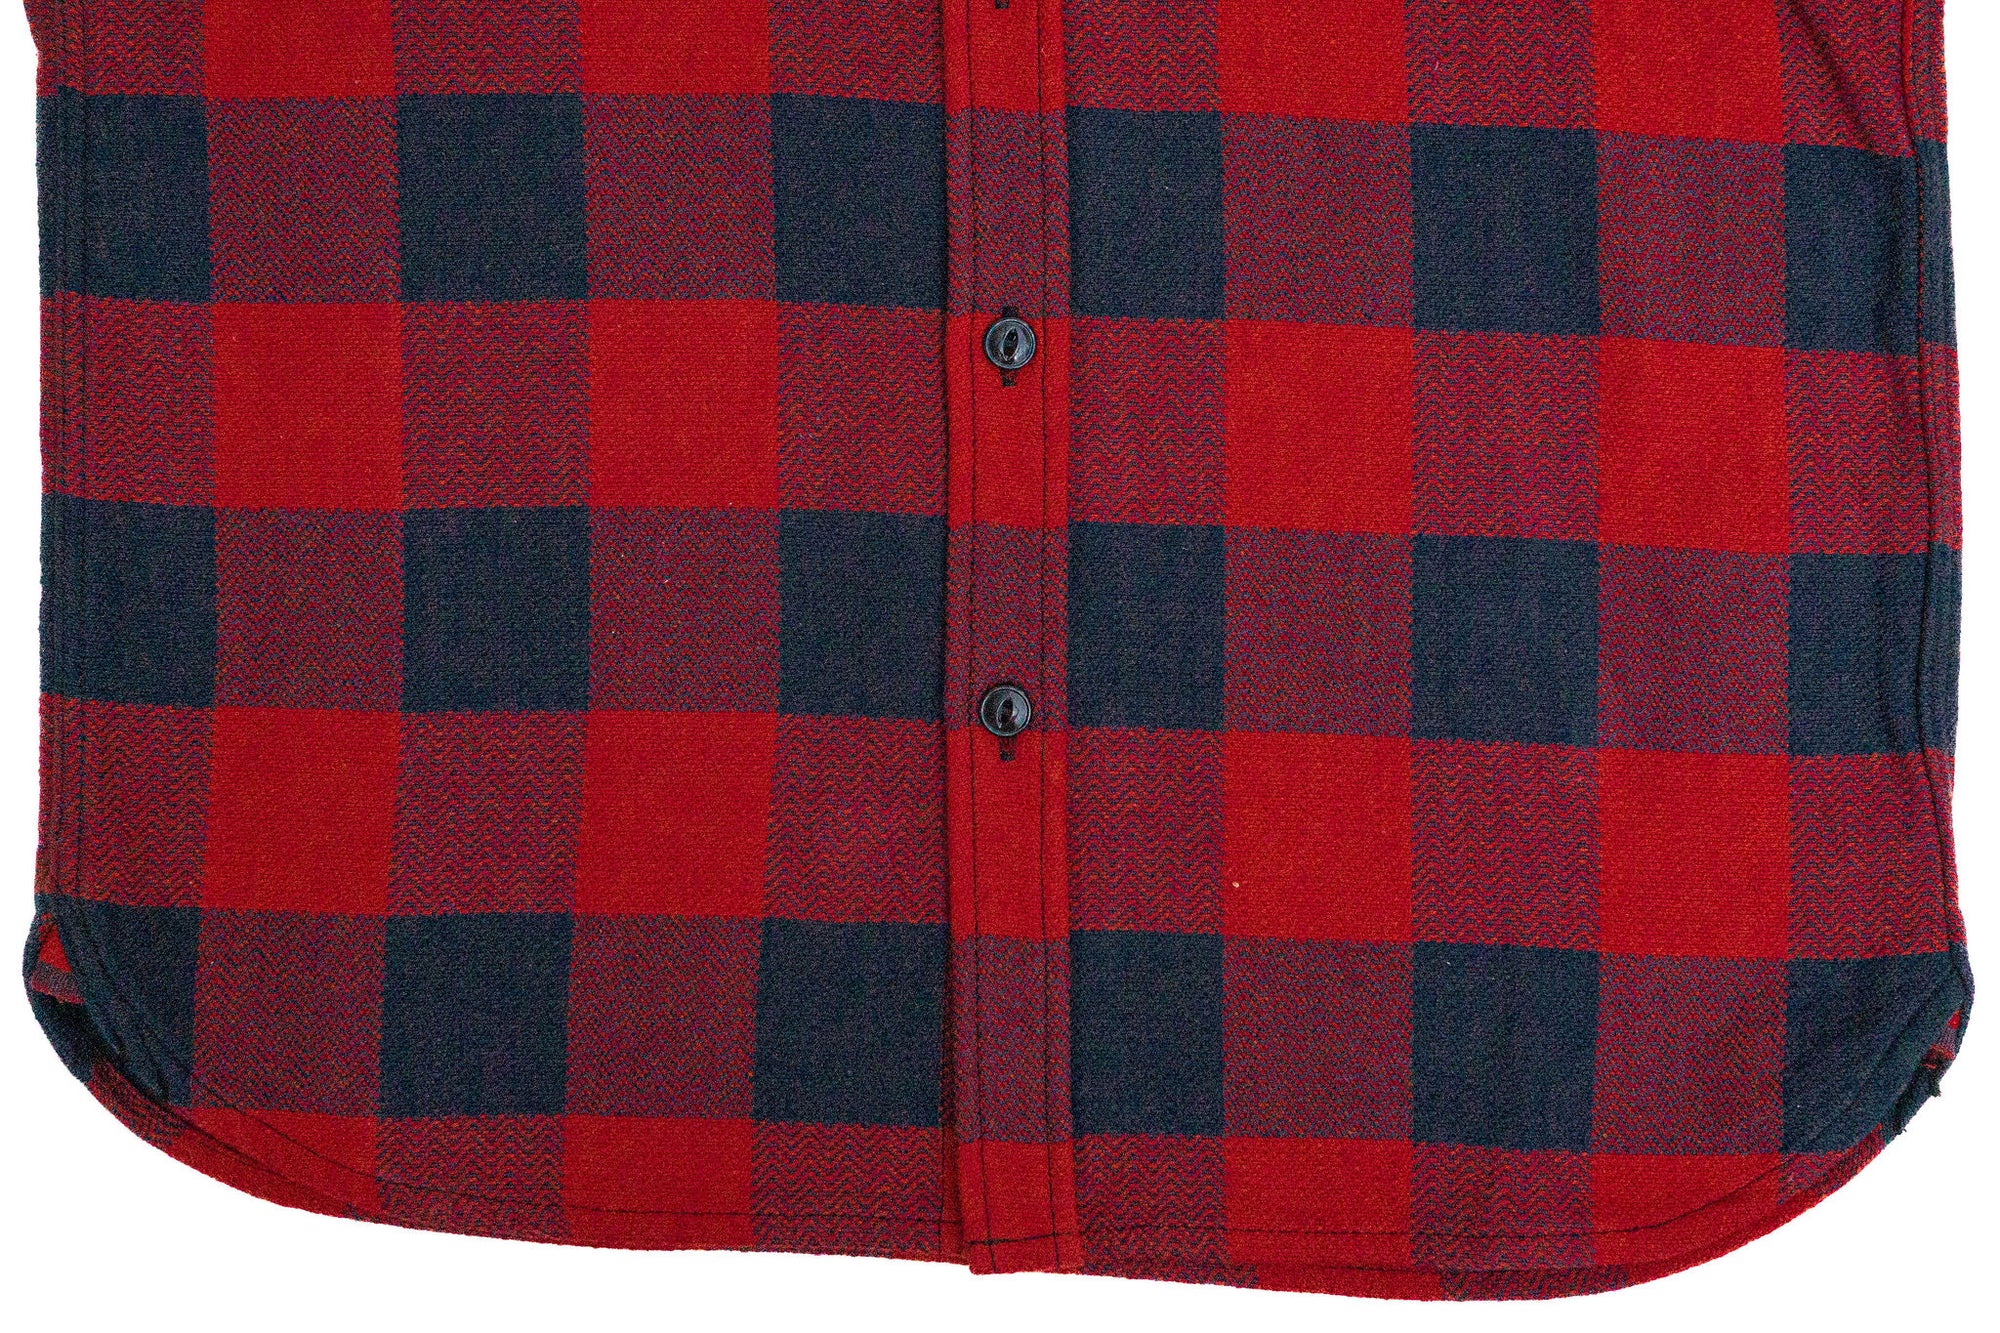 The Flat Head SNR-101L Block Check Flannel Shirt - Red/Black